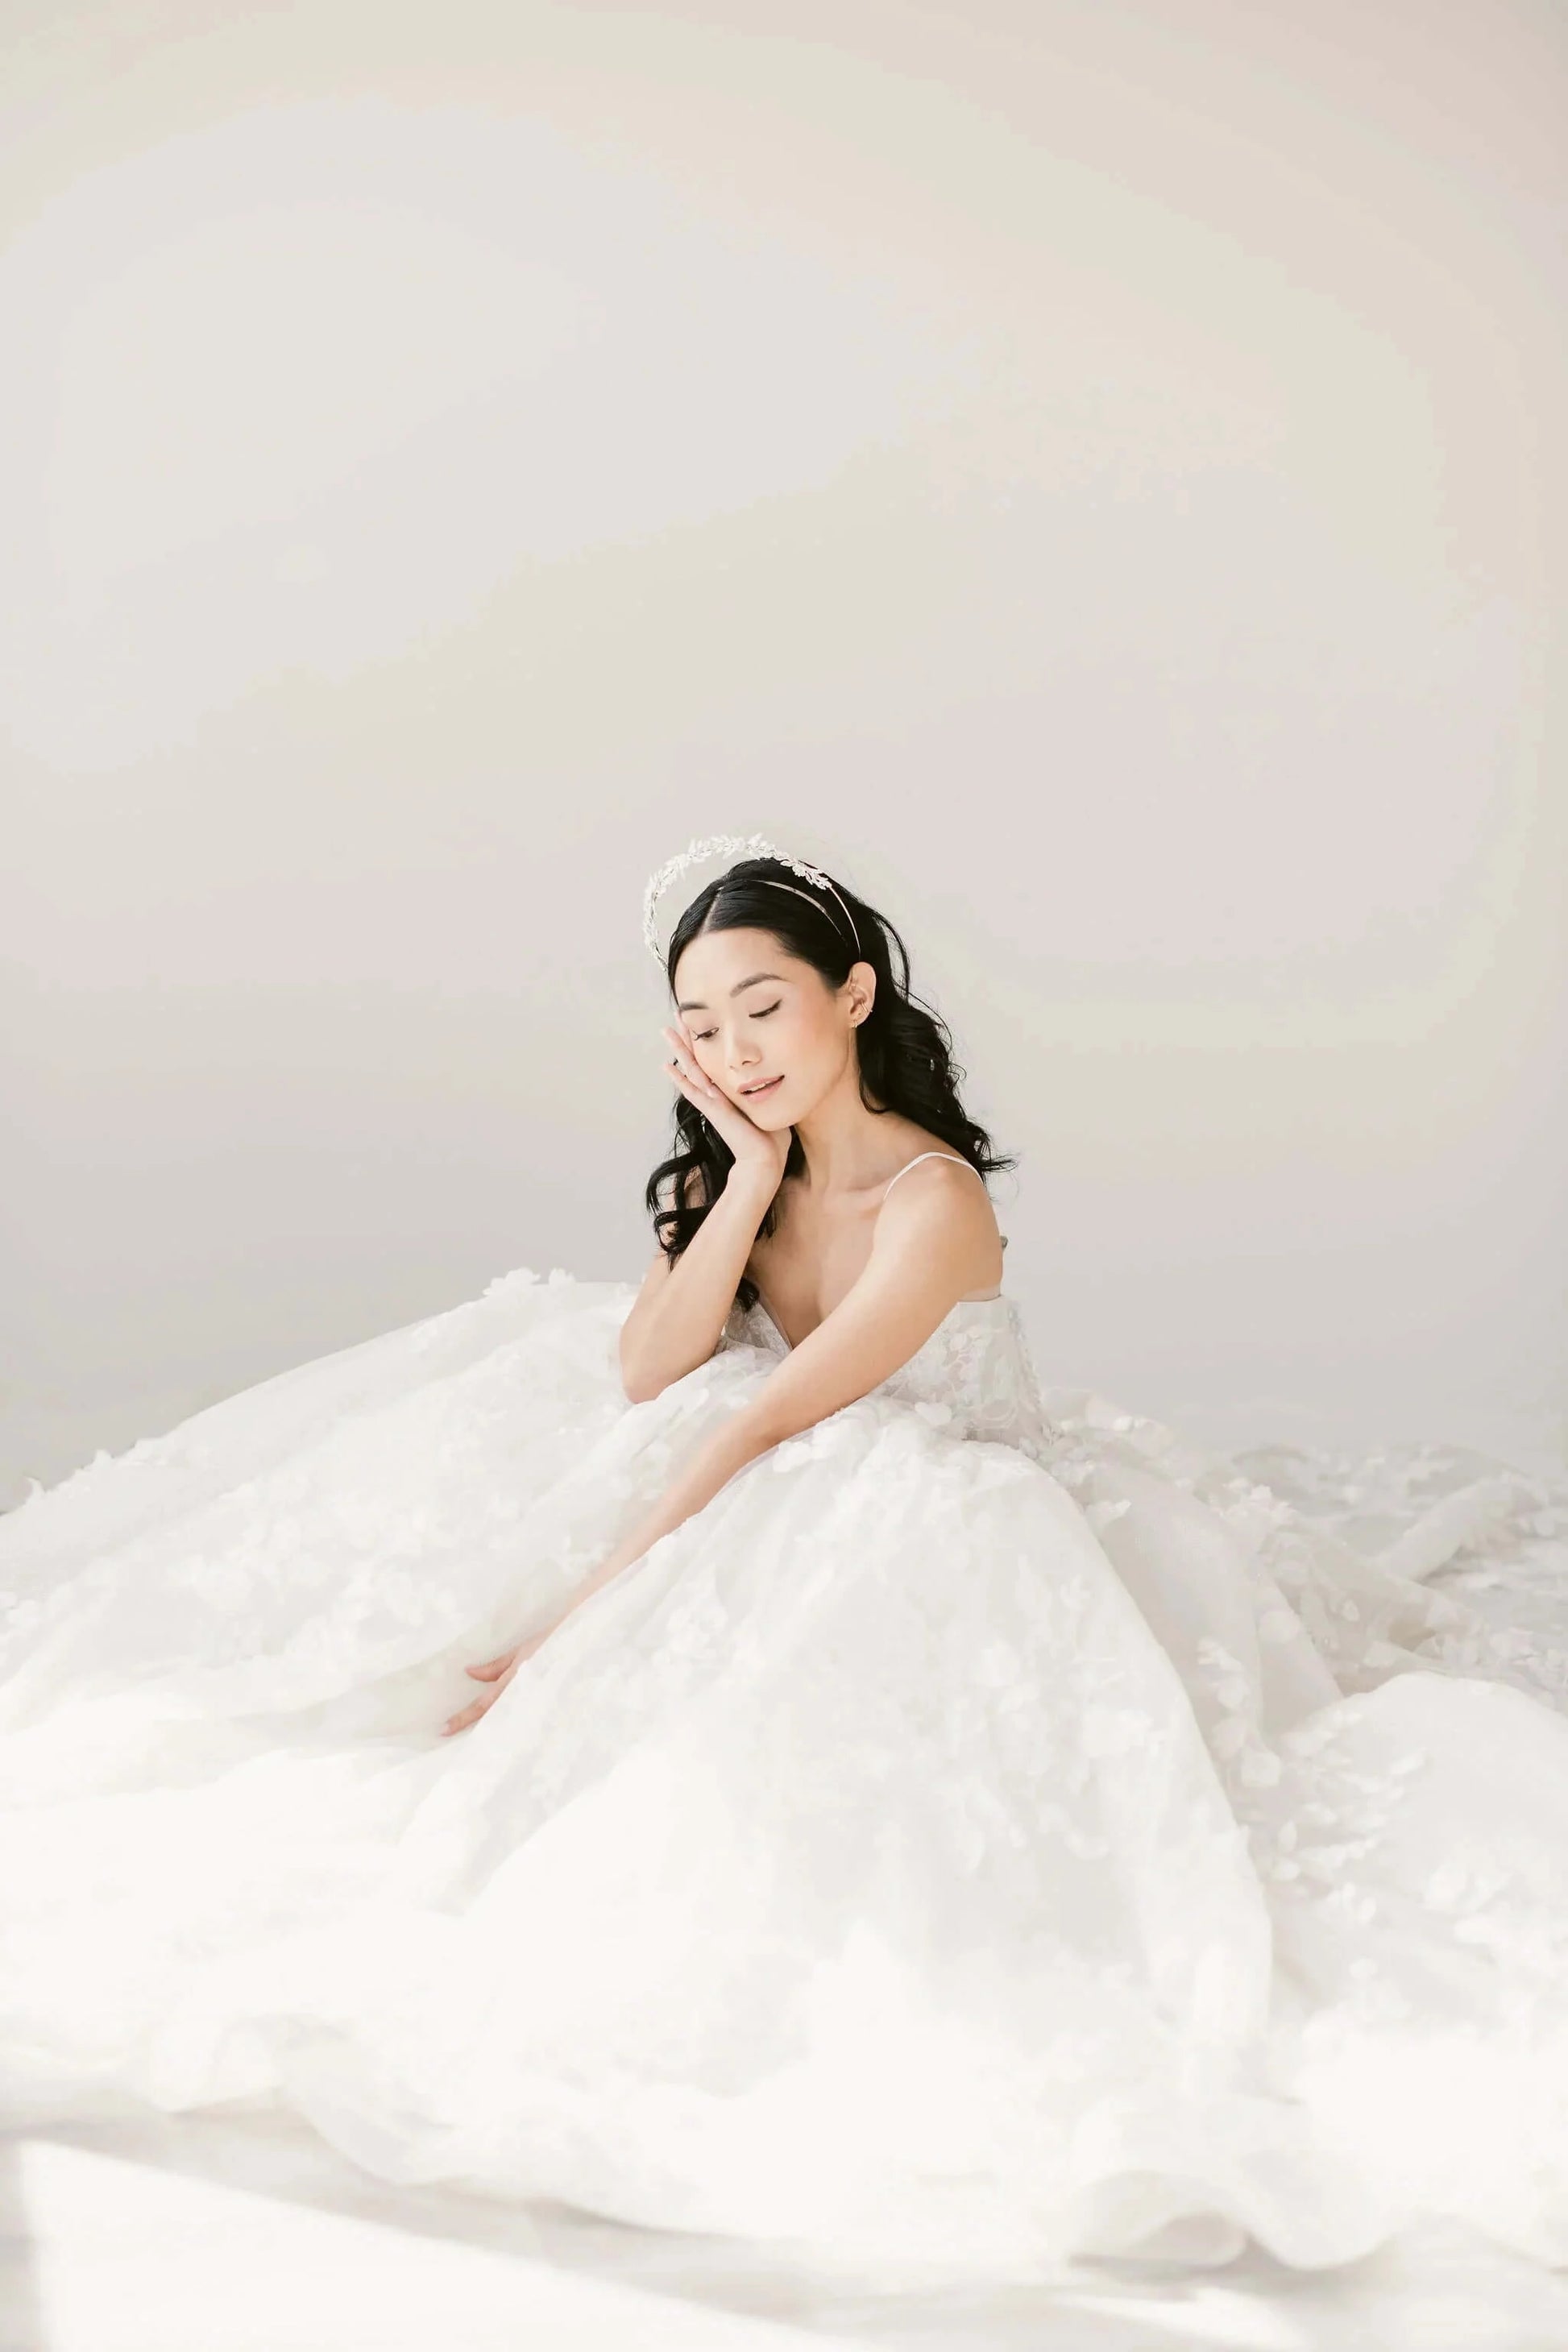 Silver bridal crown - style 9002 - ready to ship Tessa Kim